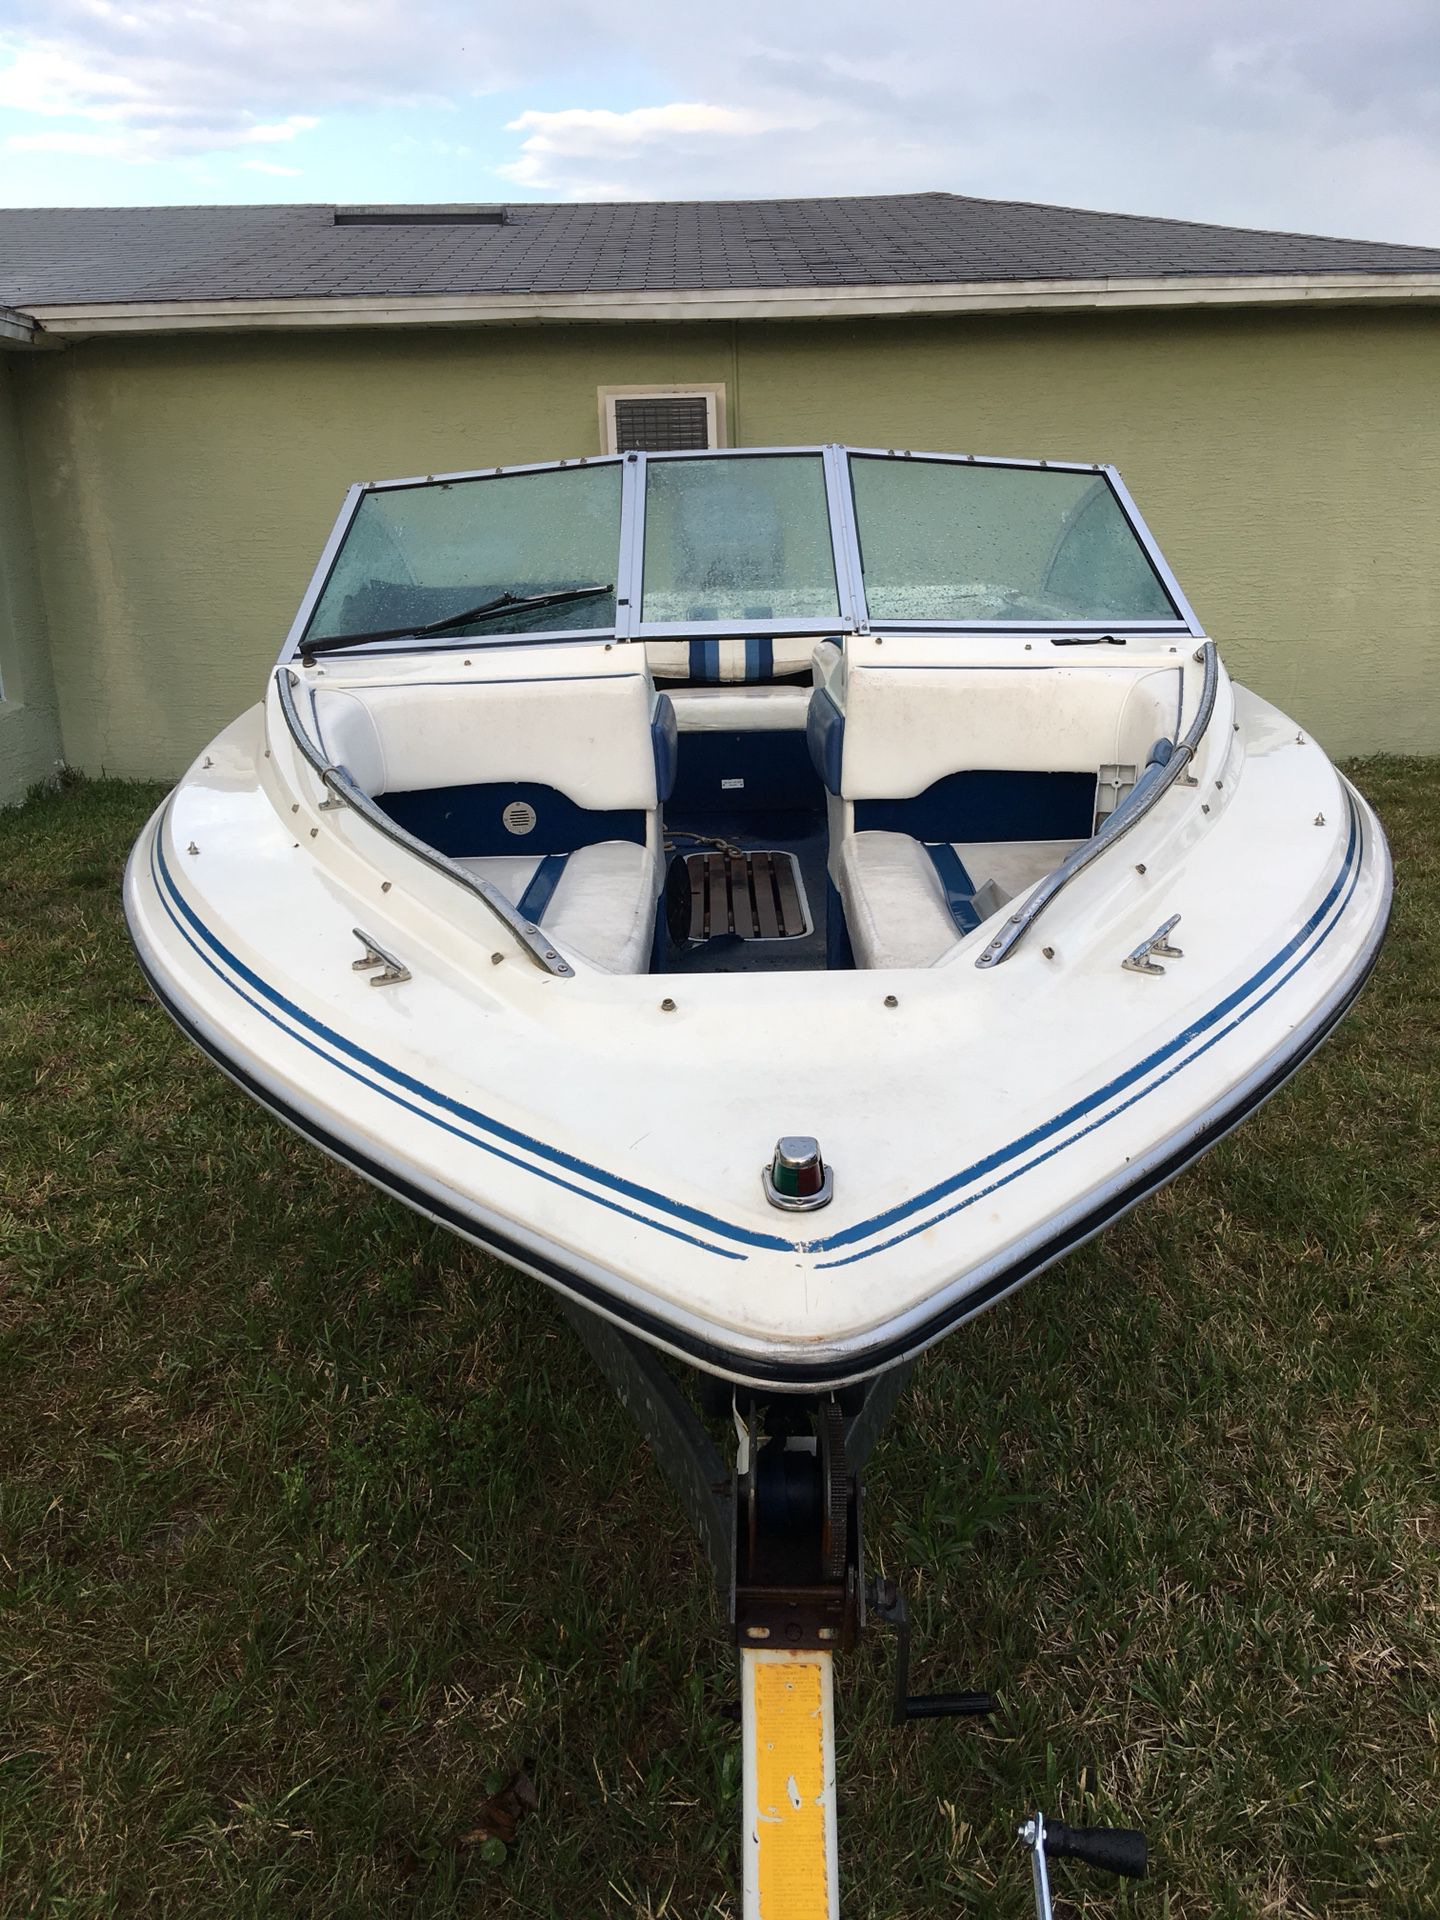 1989 Searay 180 Bowrider Boat for Sale in Daytona Beach, FL - OfferUp